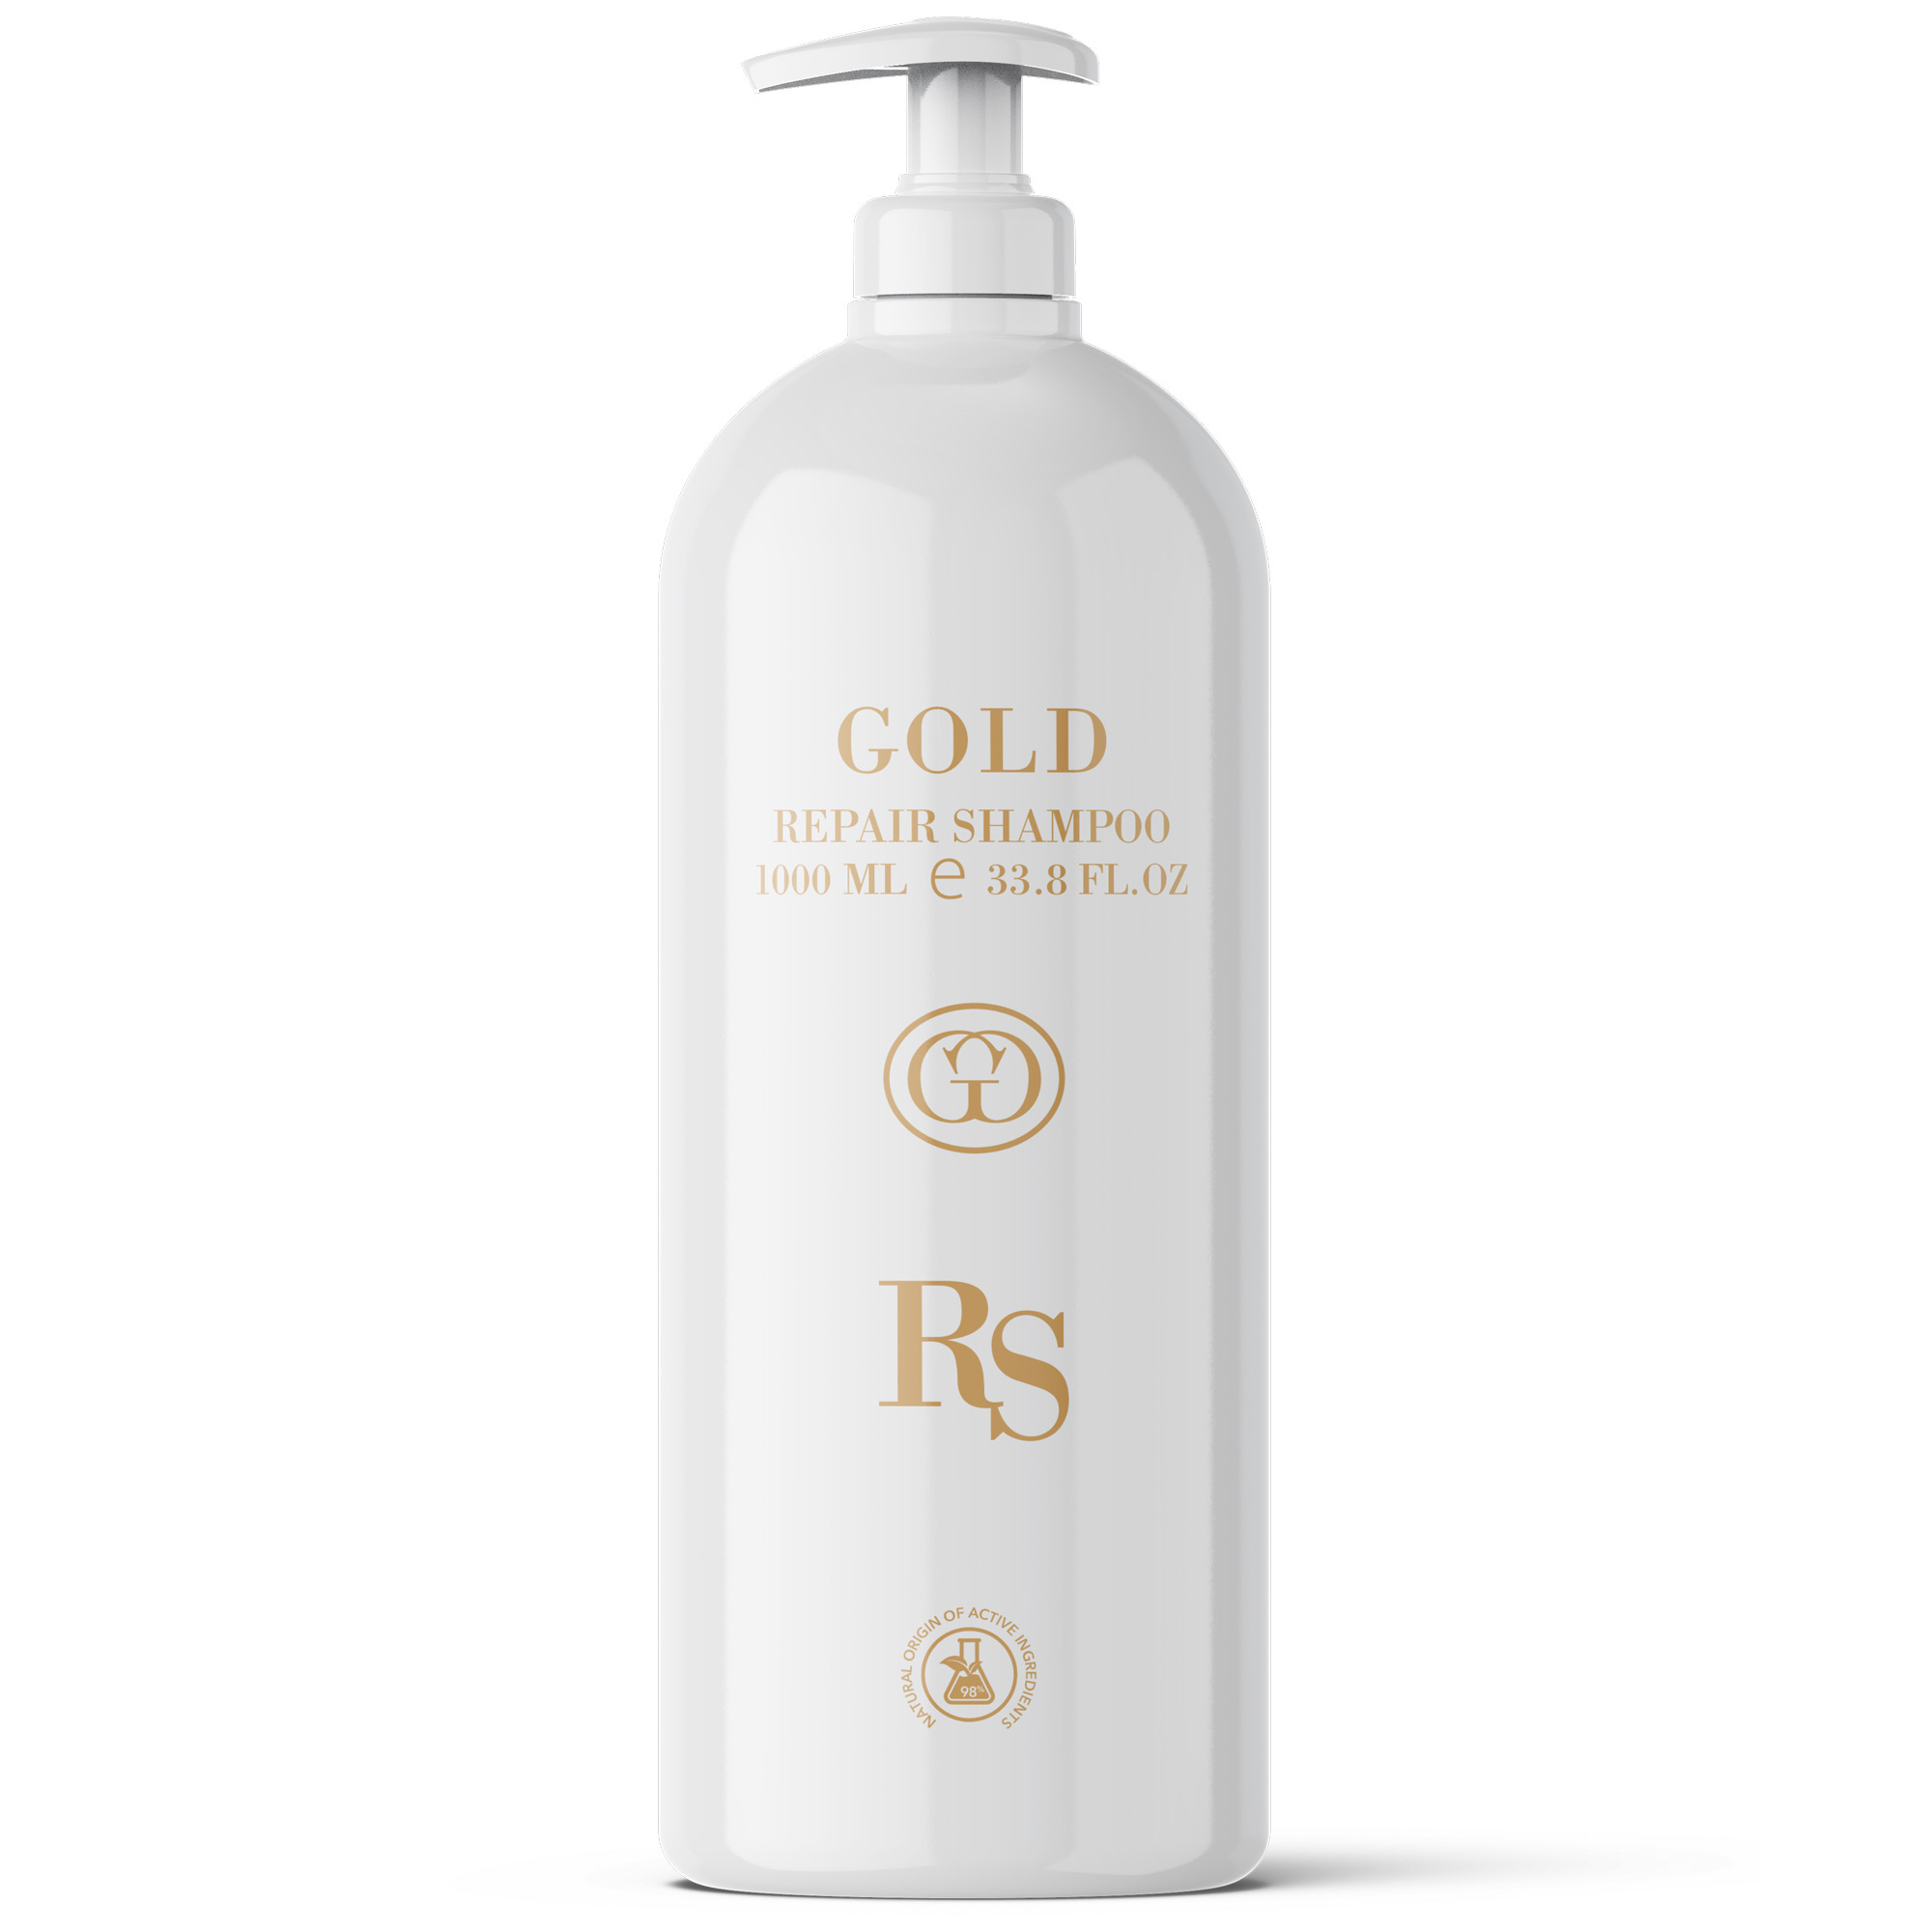 Gold Professional Shampoo - Repair